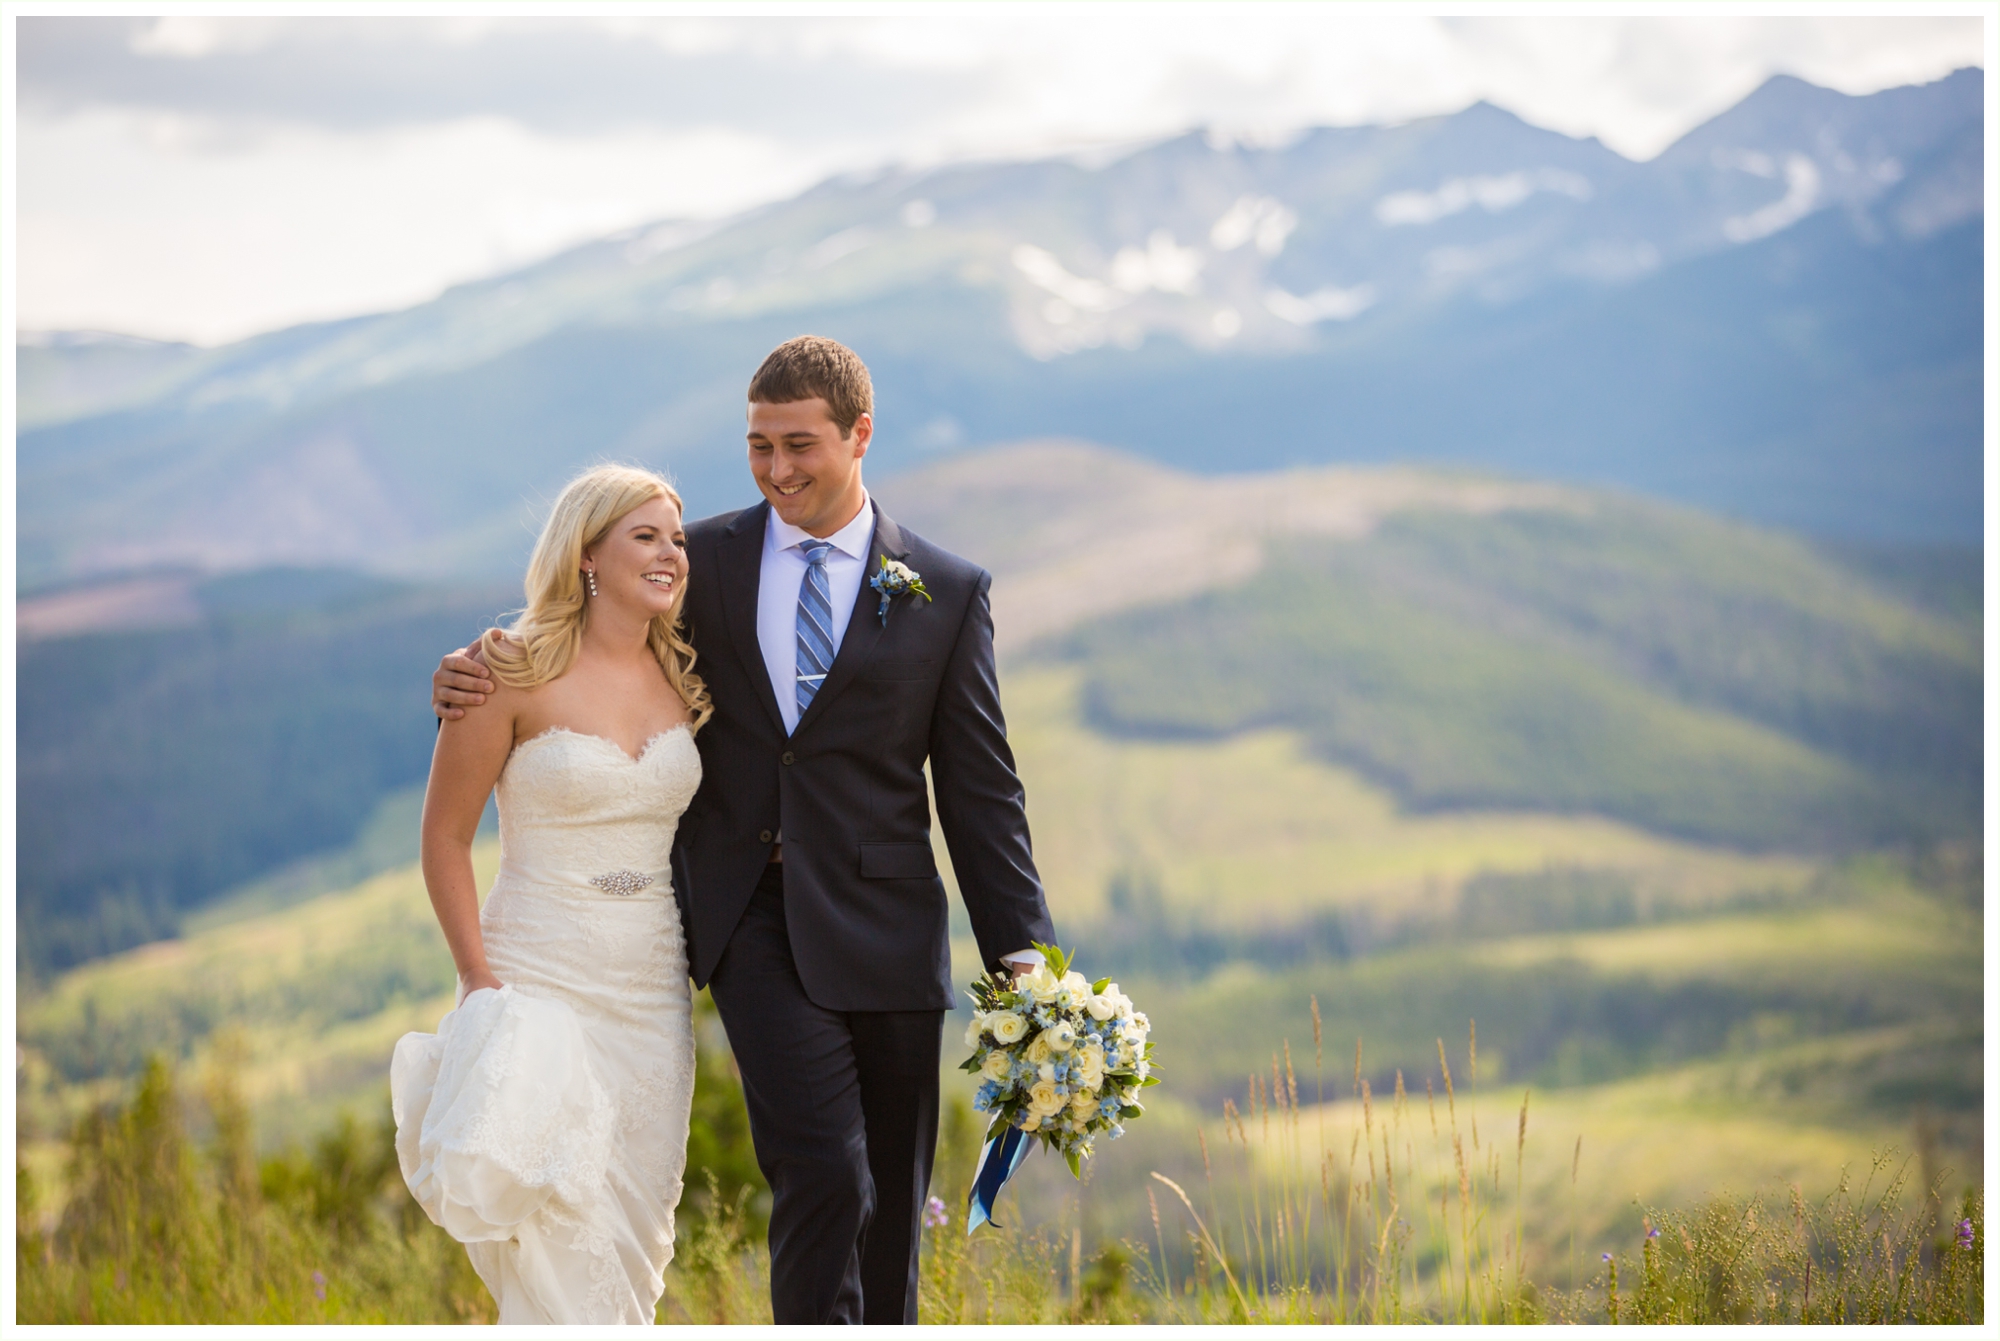 bride and groom outdoor wedding portraits at sapphire point overlook in breckenridge